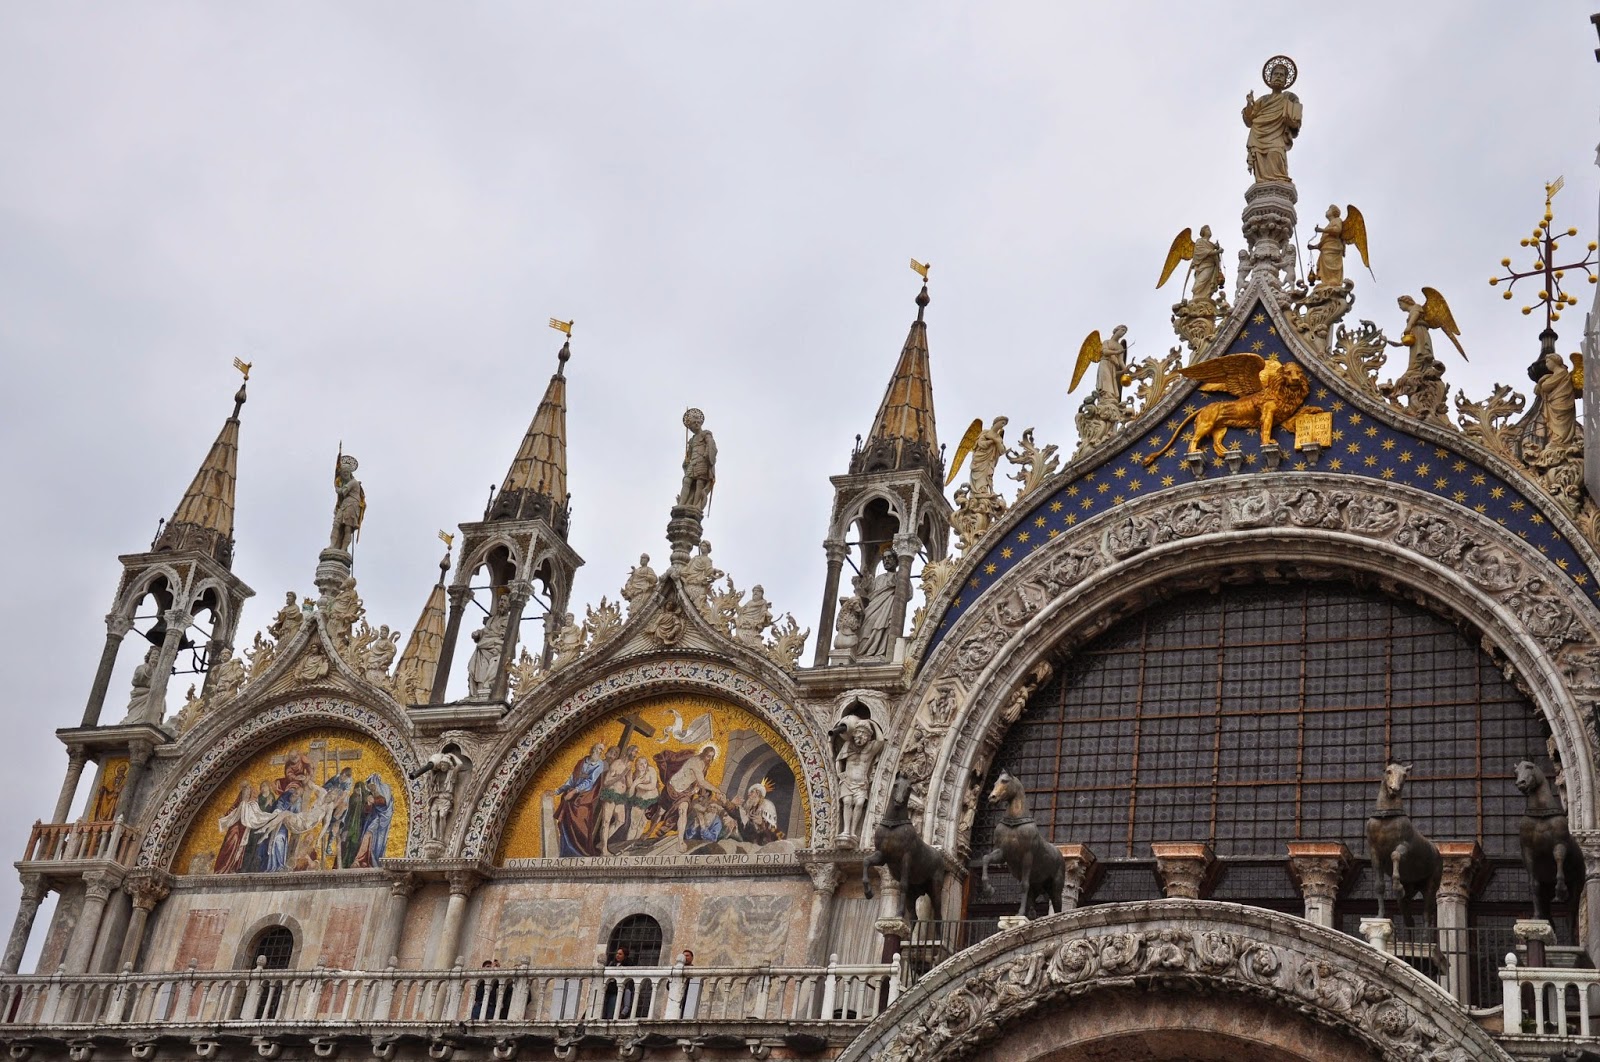 The facade of St. Mark's Basilica in Venice